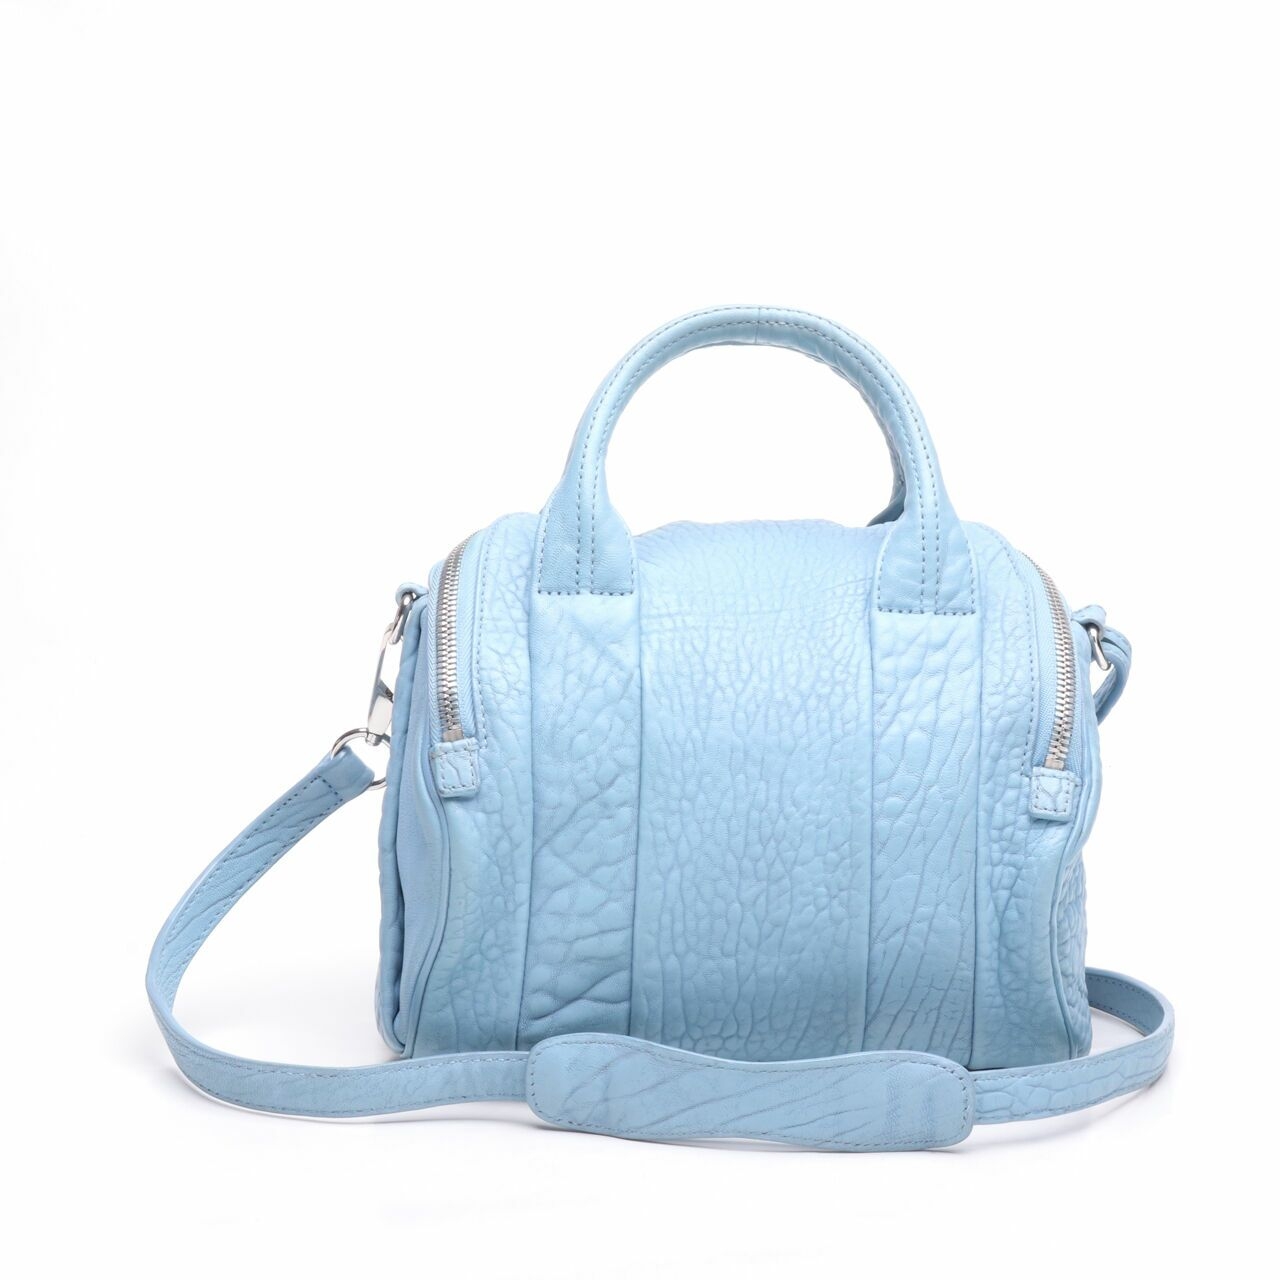 Alexander Wang Blue Pebbled Leather Rocco Duffle Bag Satchel